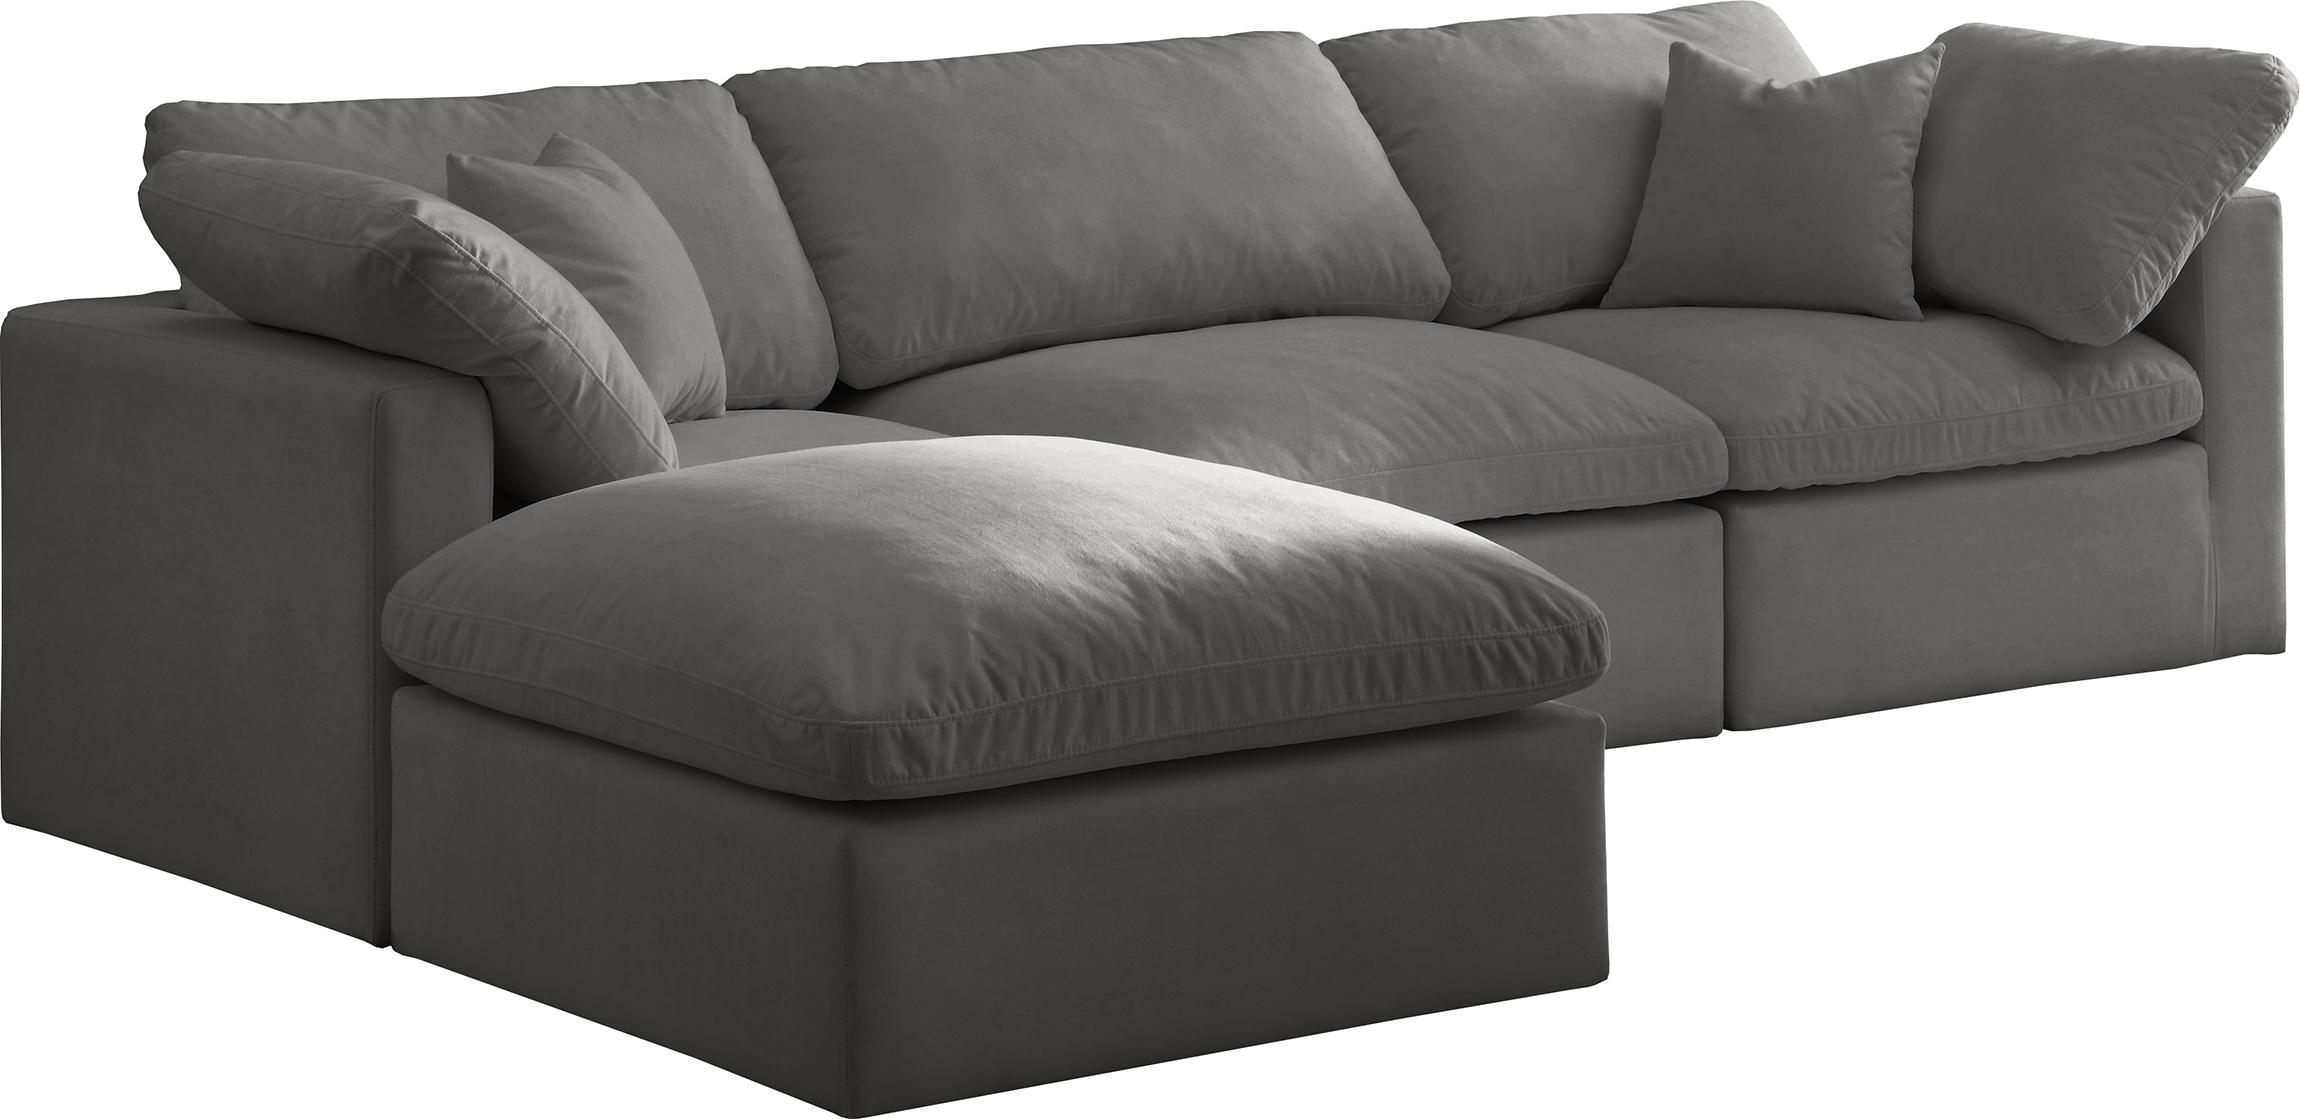 Contemporary, Modern Sectional Sofa Cloud GREY GREY-Sec-Cloud in Gray Fabric